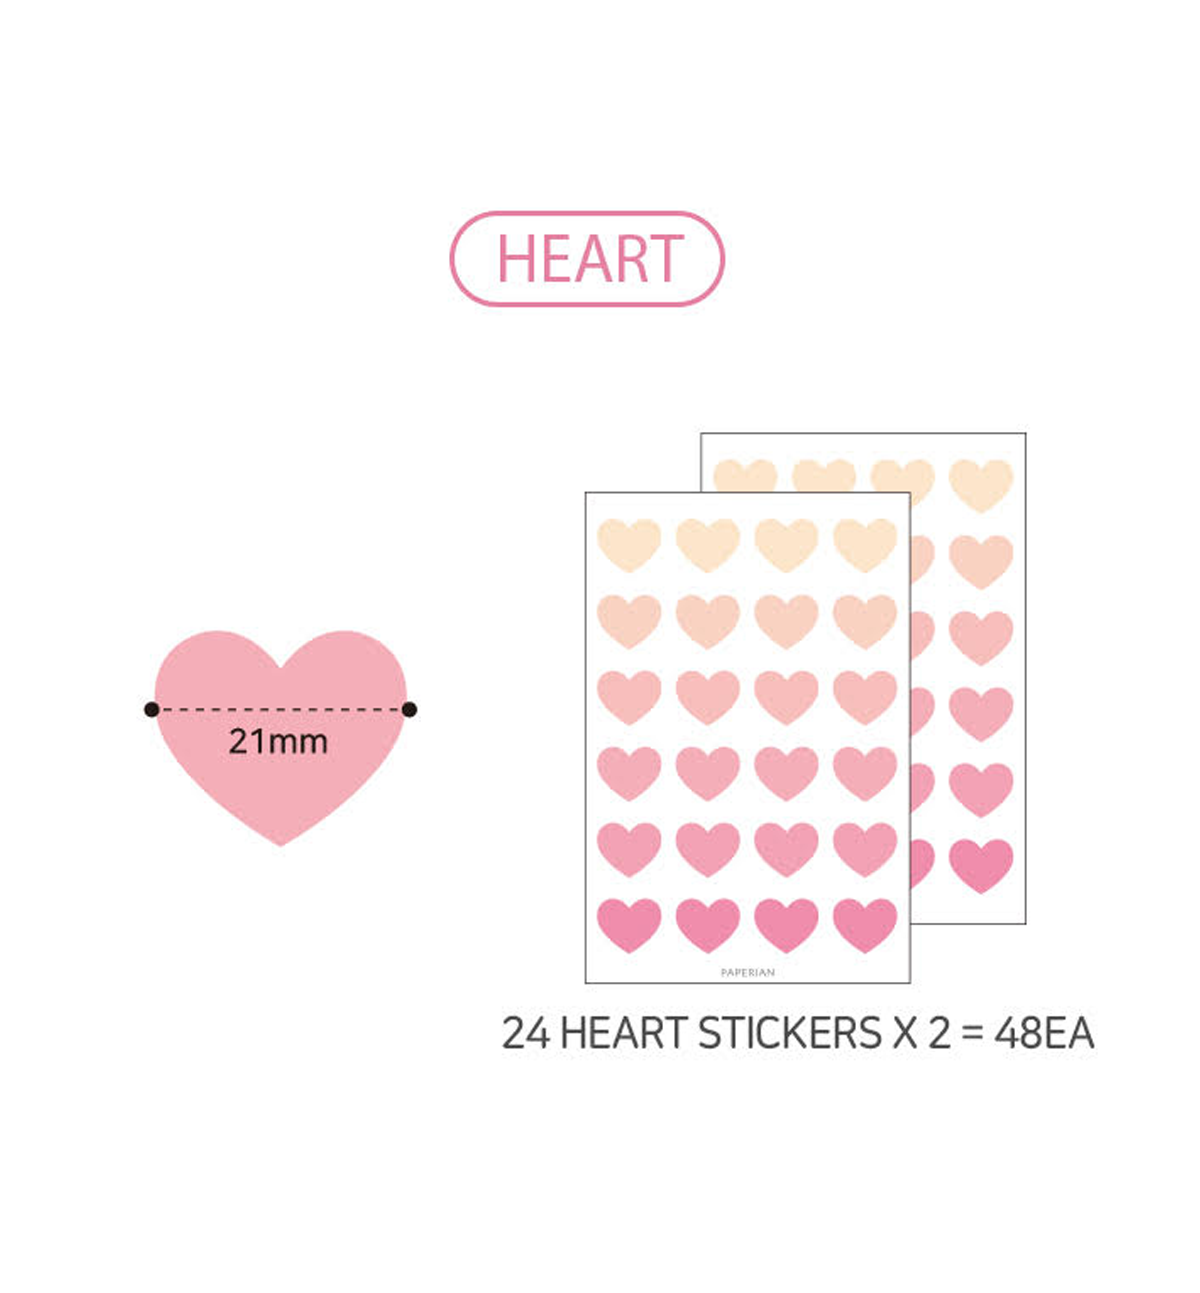 Color Paletter Sticker [Heart]